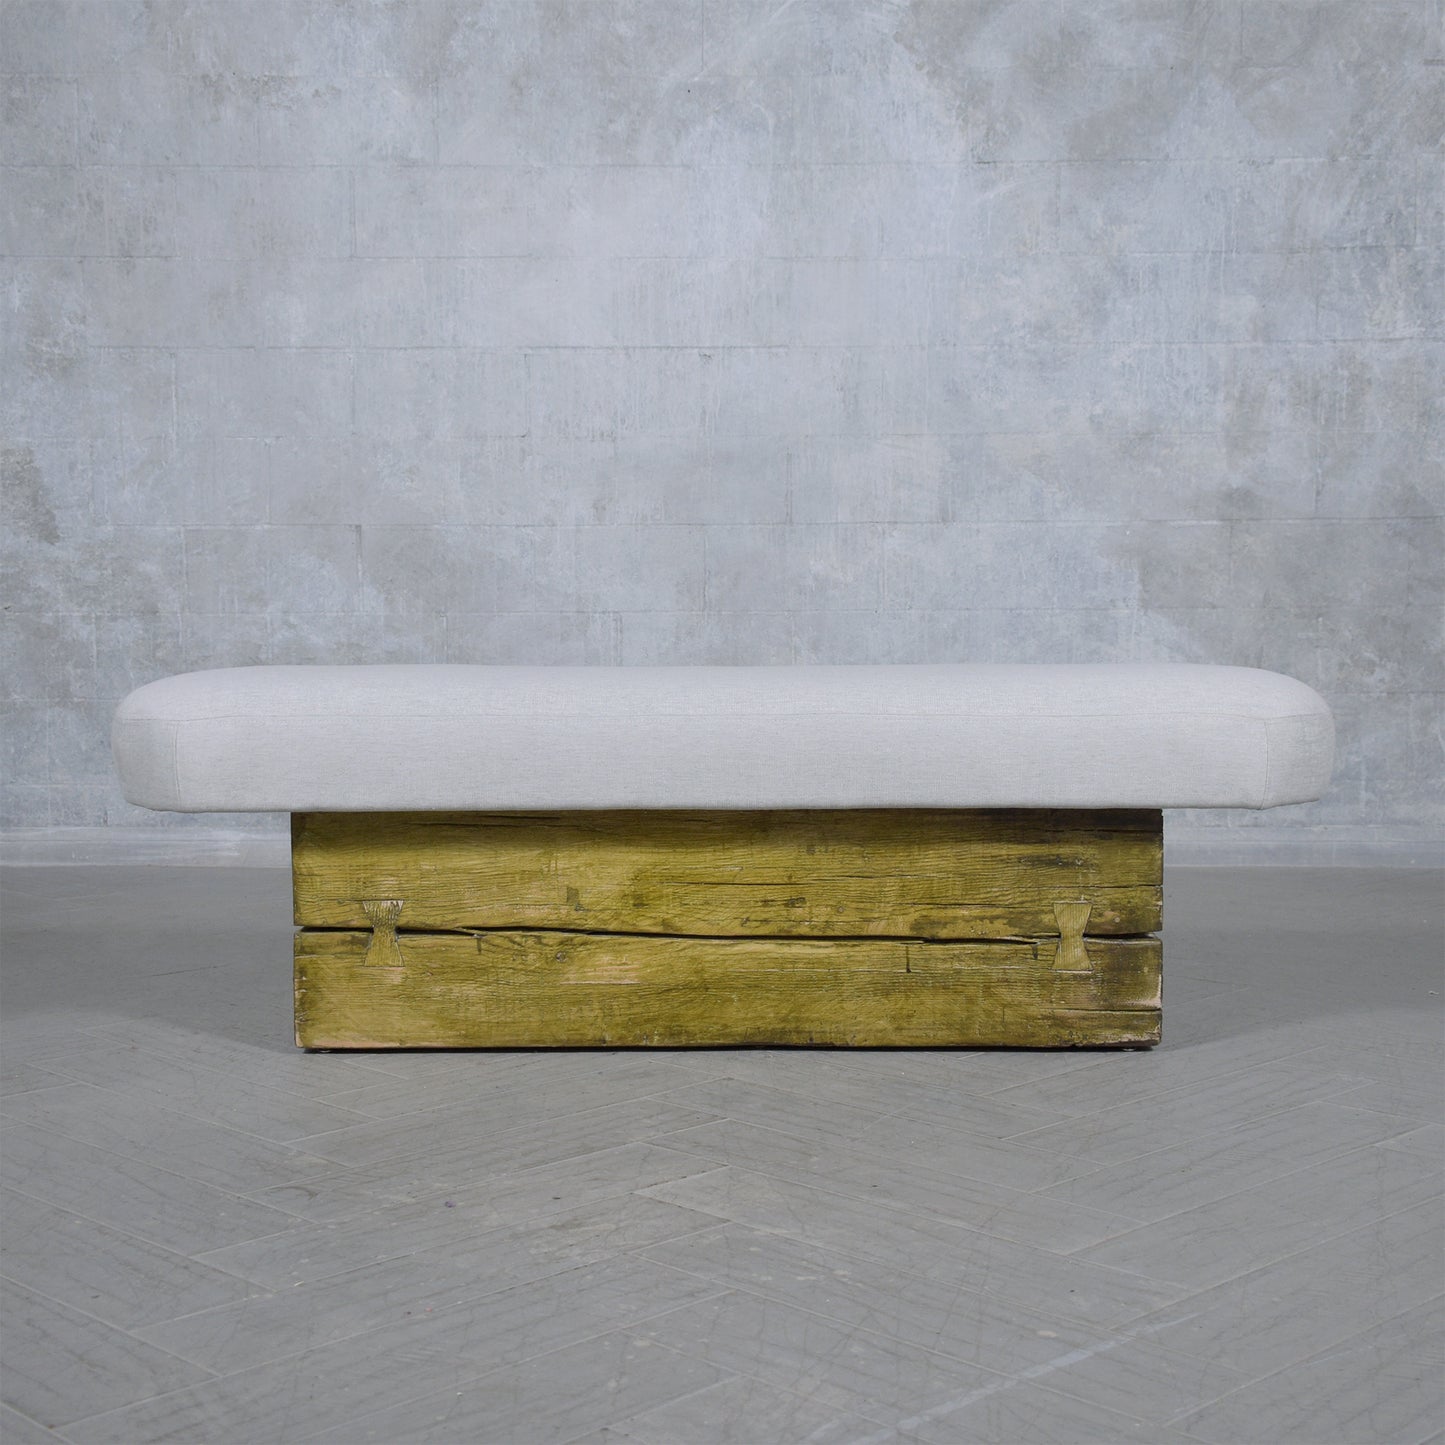 Restored Modern Slab Bench with Cushion